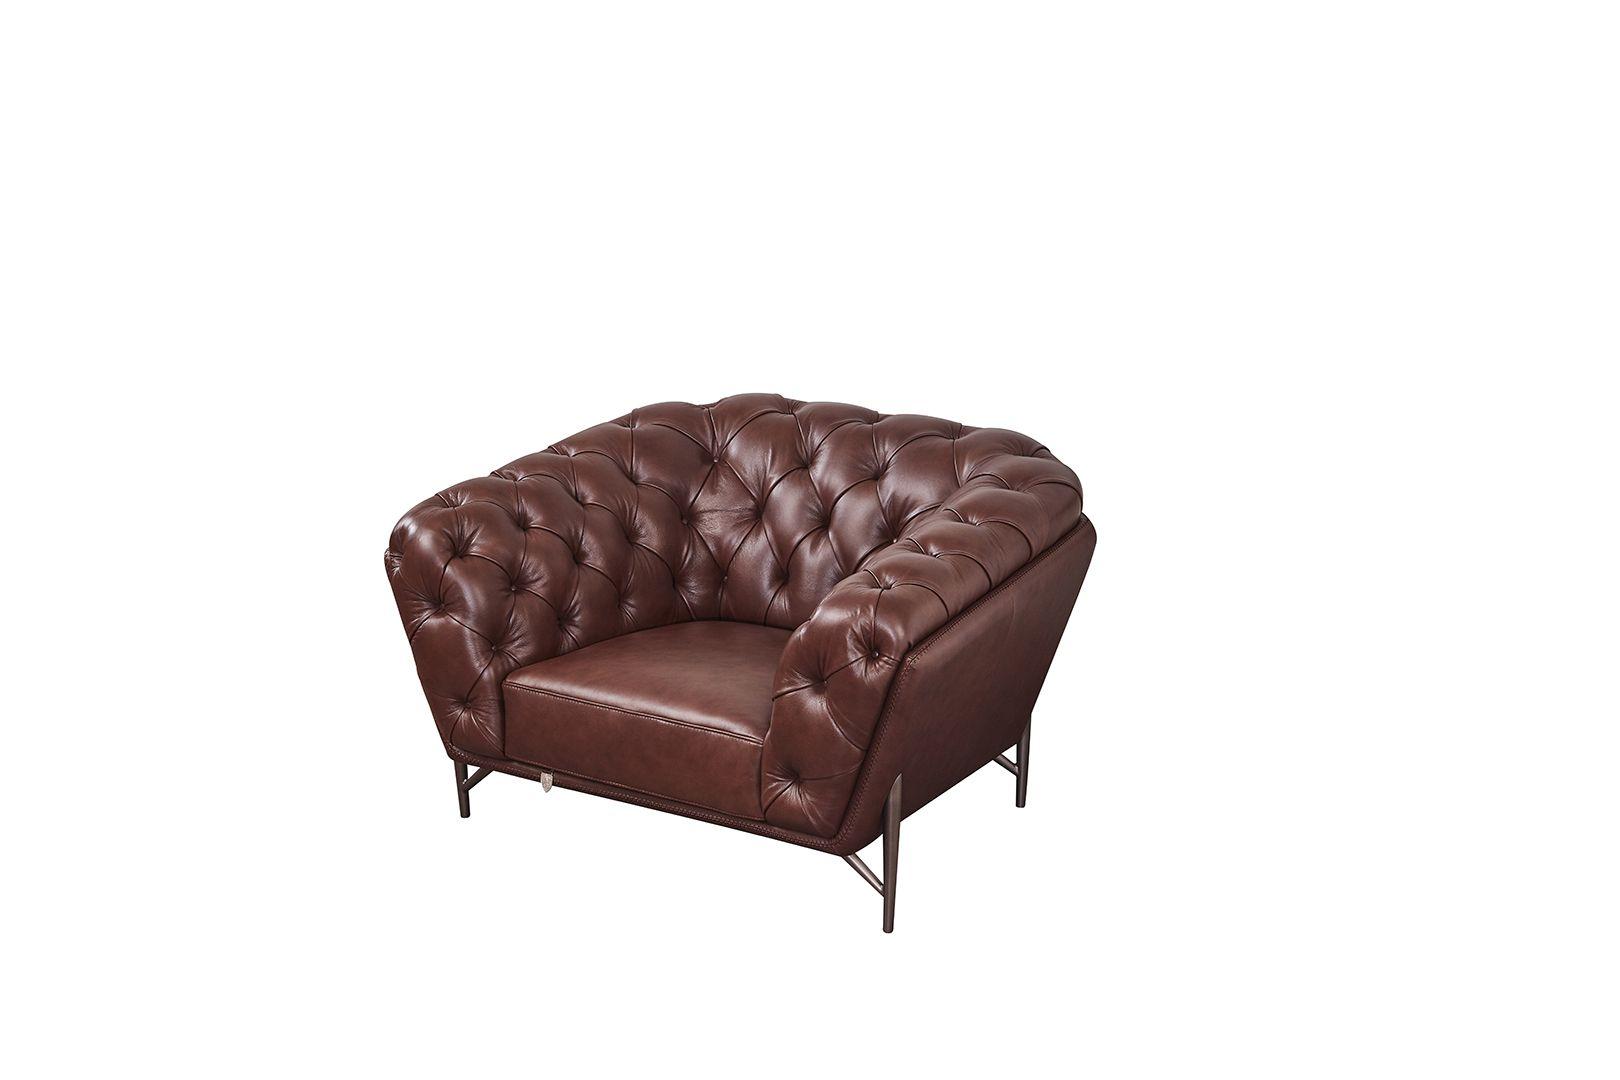 Classic Oversized Chair EK8009-BRO-CHR EK8009-BRO-CHR in Brown Leather